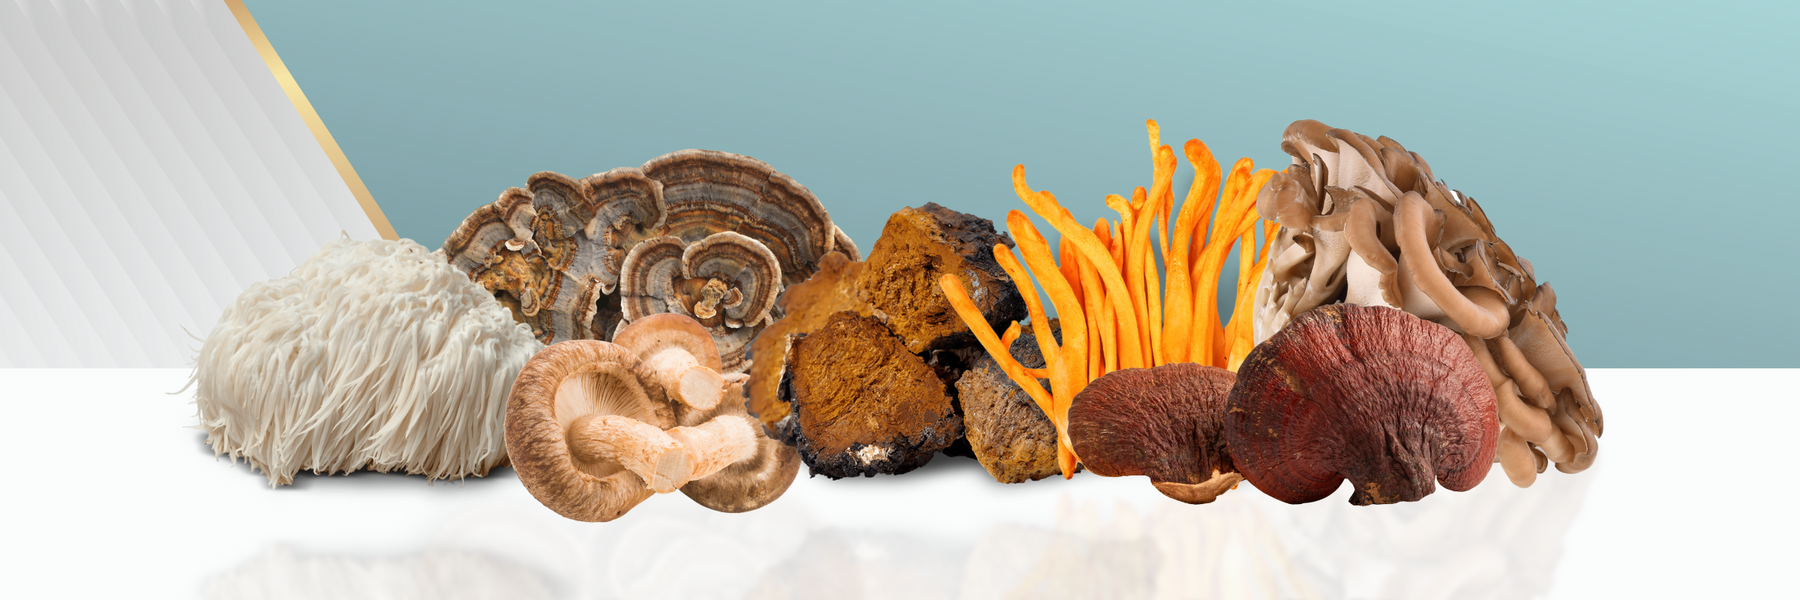 Medicinal Mushrooms for Immunity